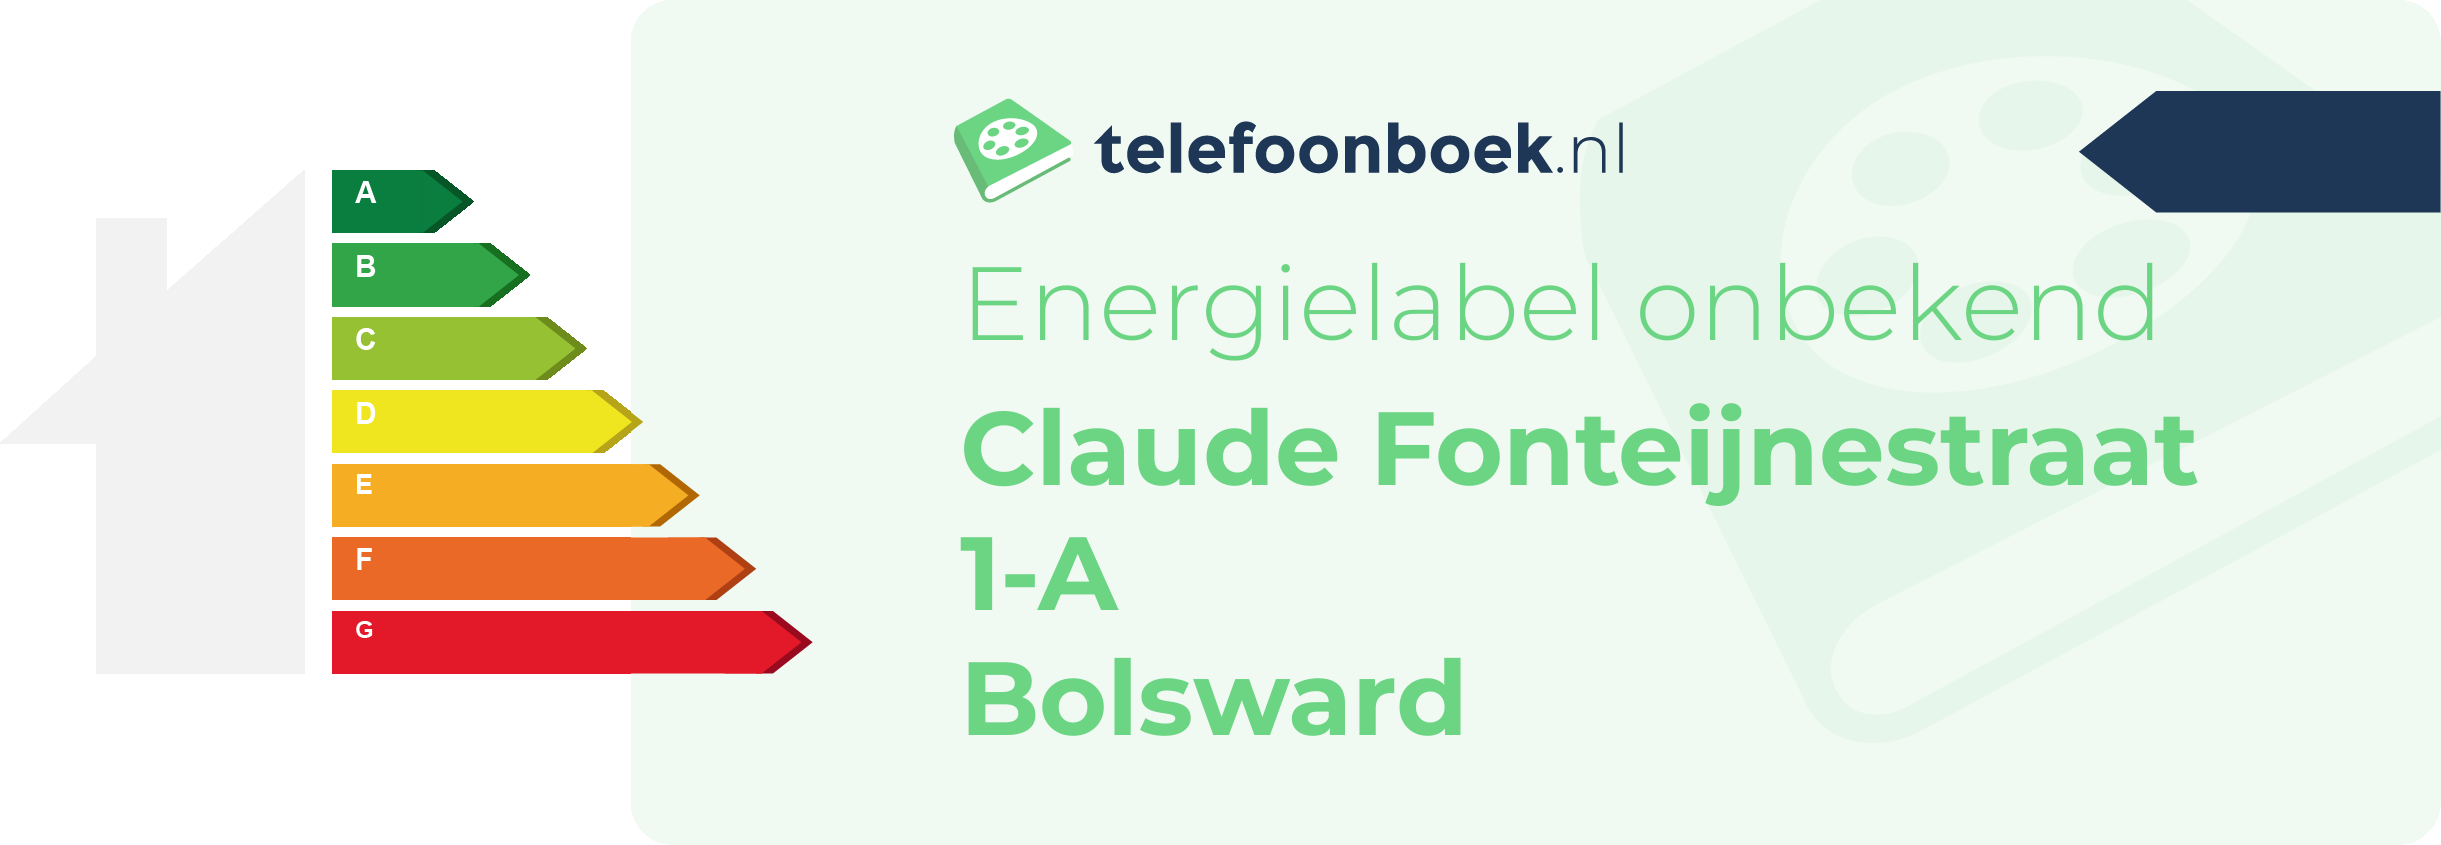 Energielabel Claude Fonteijnestraat 1-A Bolsward